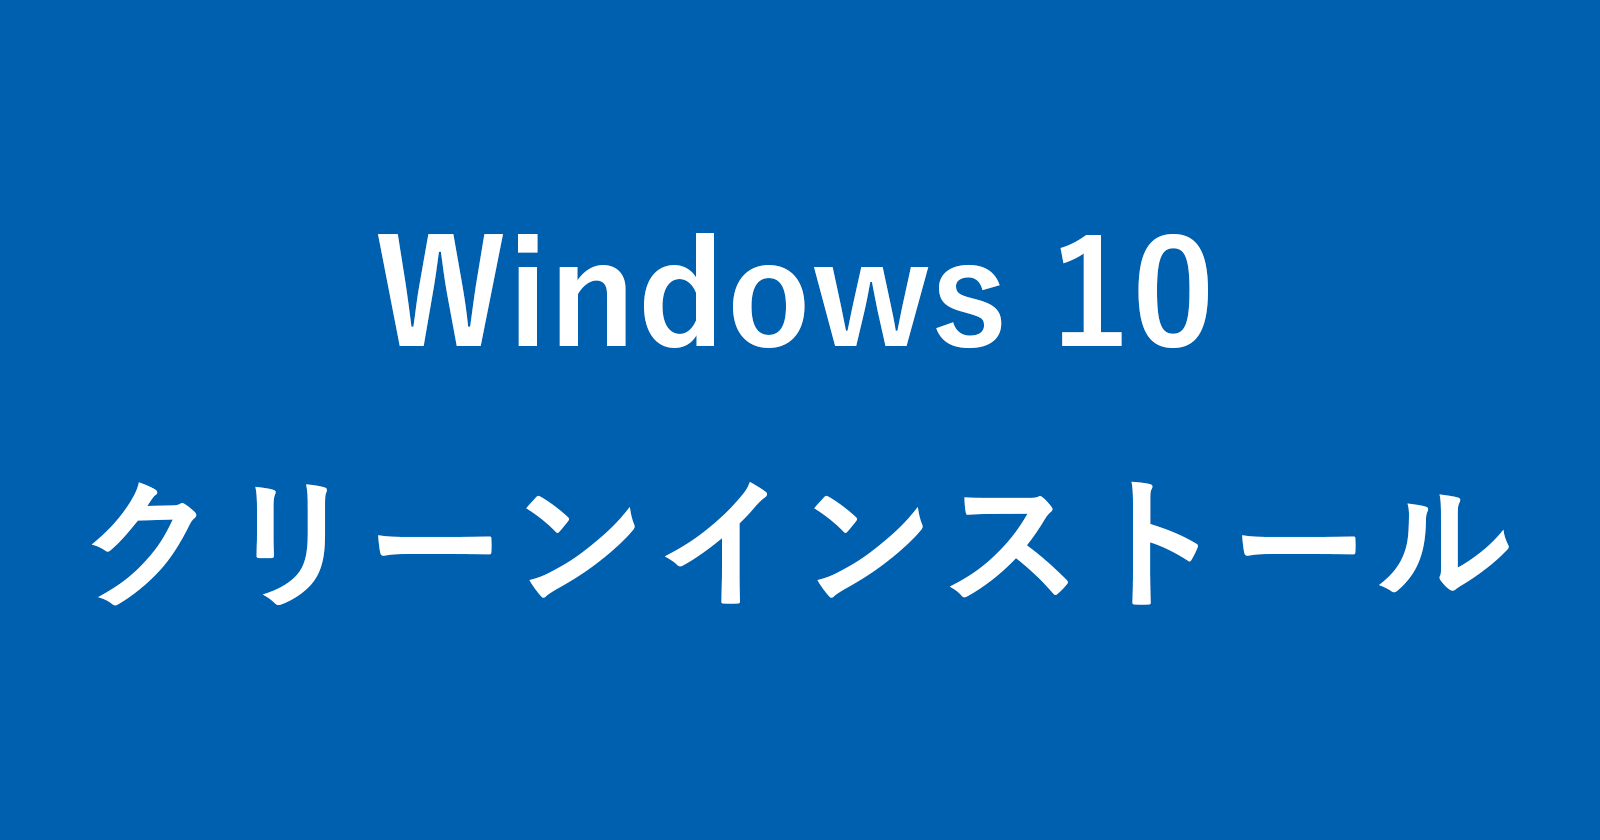 windows 10 clean install